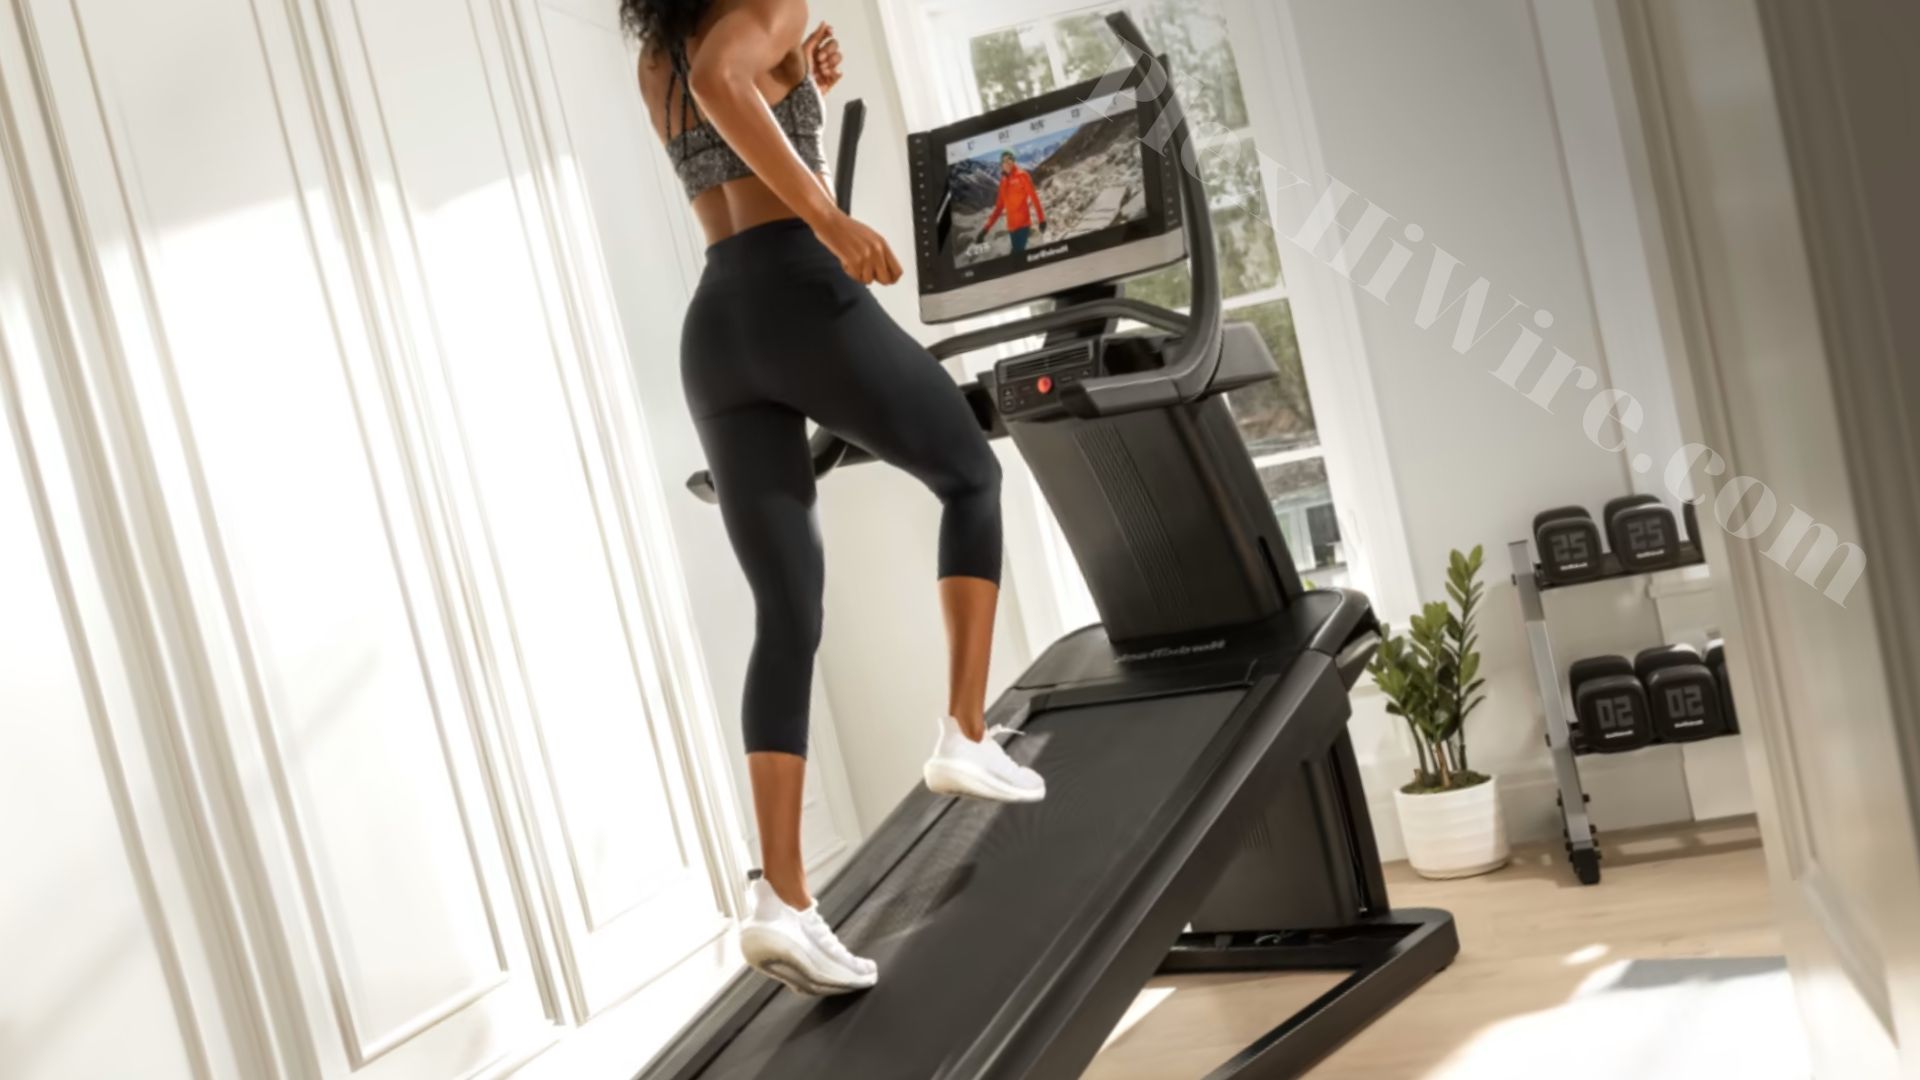 Who should not run on the treadmill?